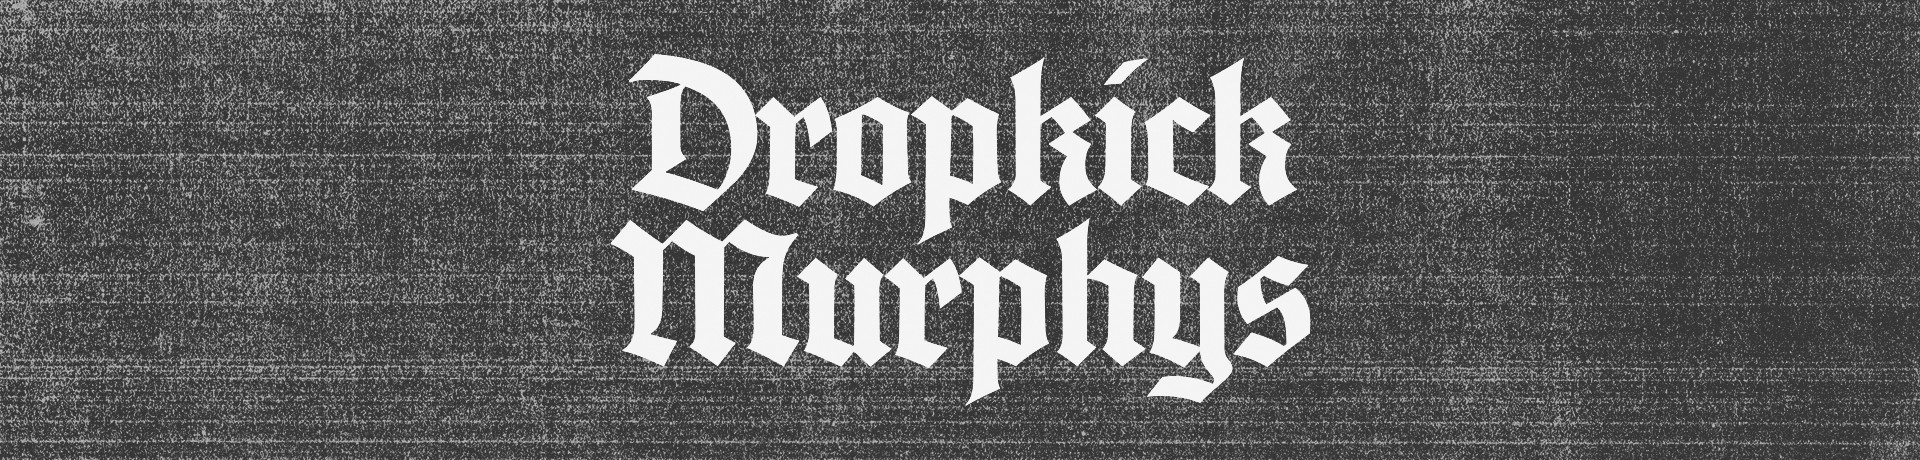 Dropkick Murphys - Skelly Piper